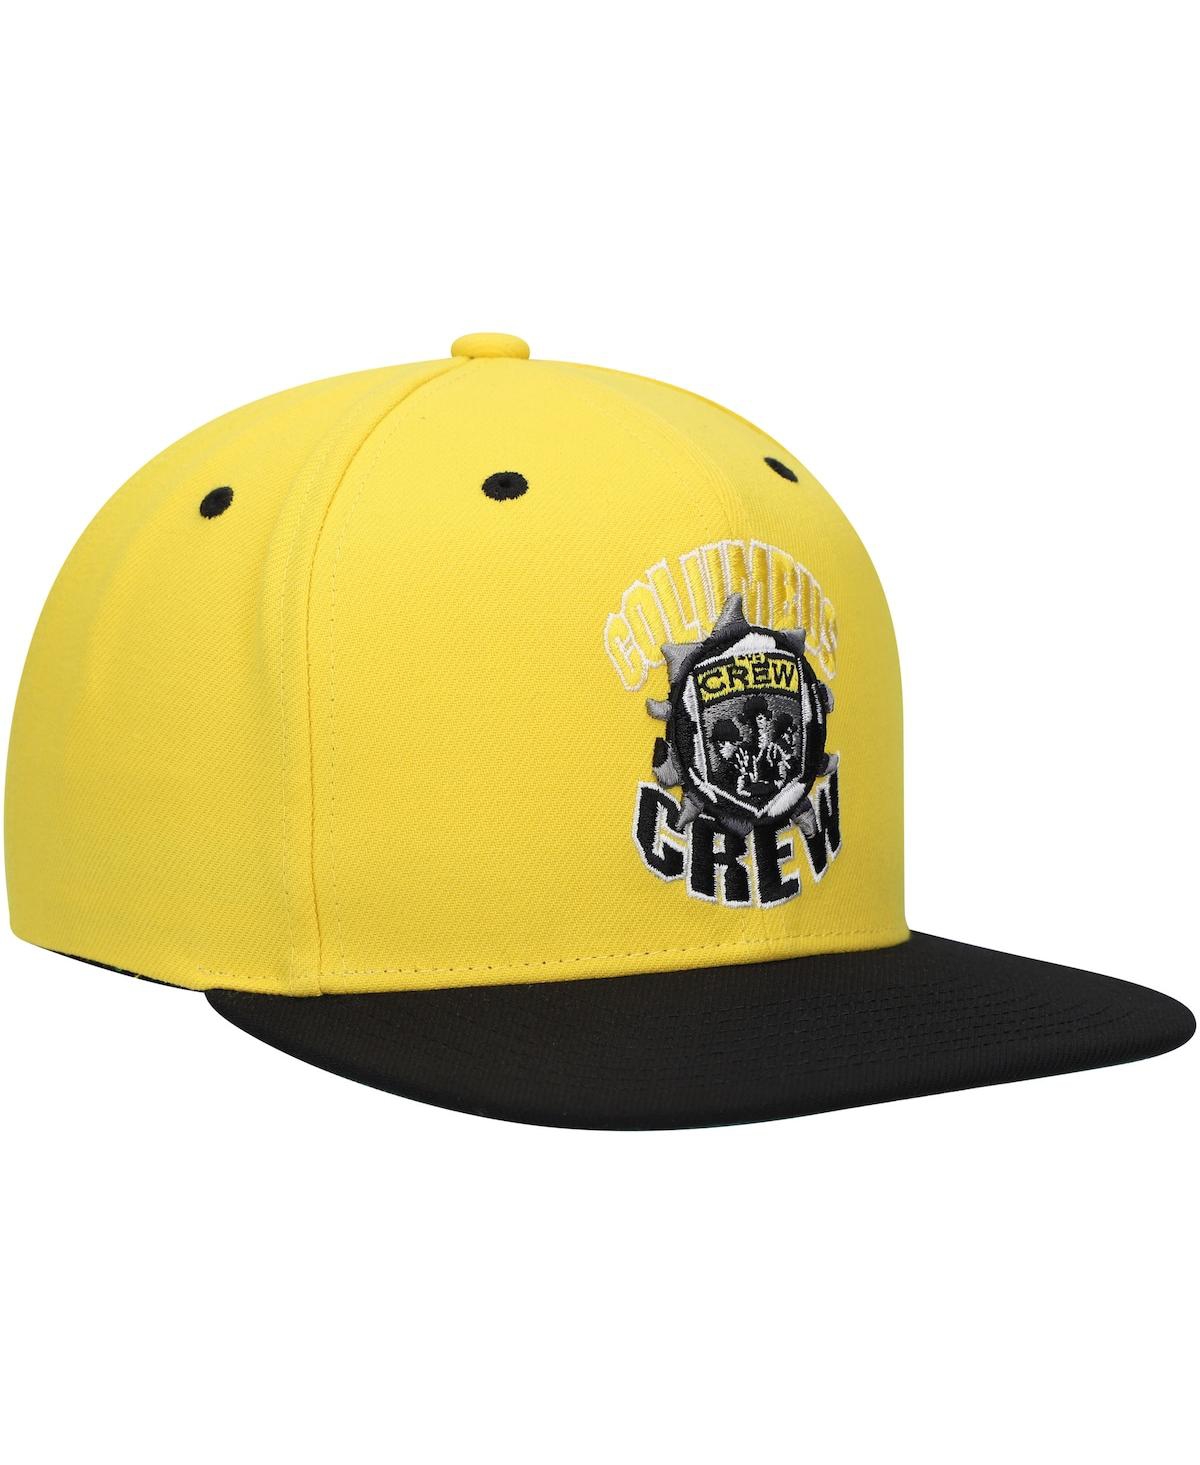 Shop Mitchell & Ness Men's  Gold Columbus Crew Breakthrough Snapback Hat